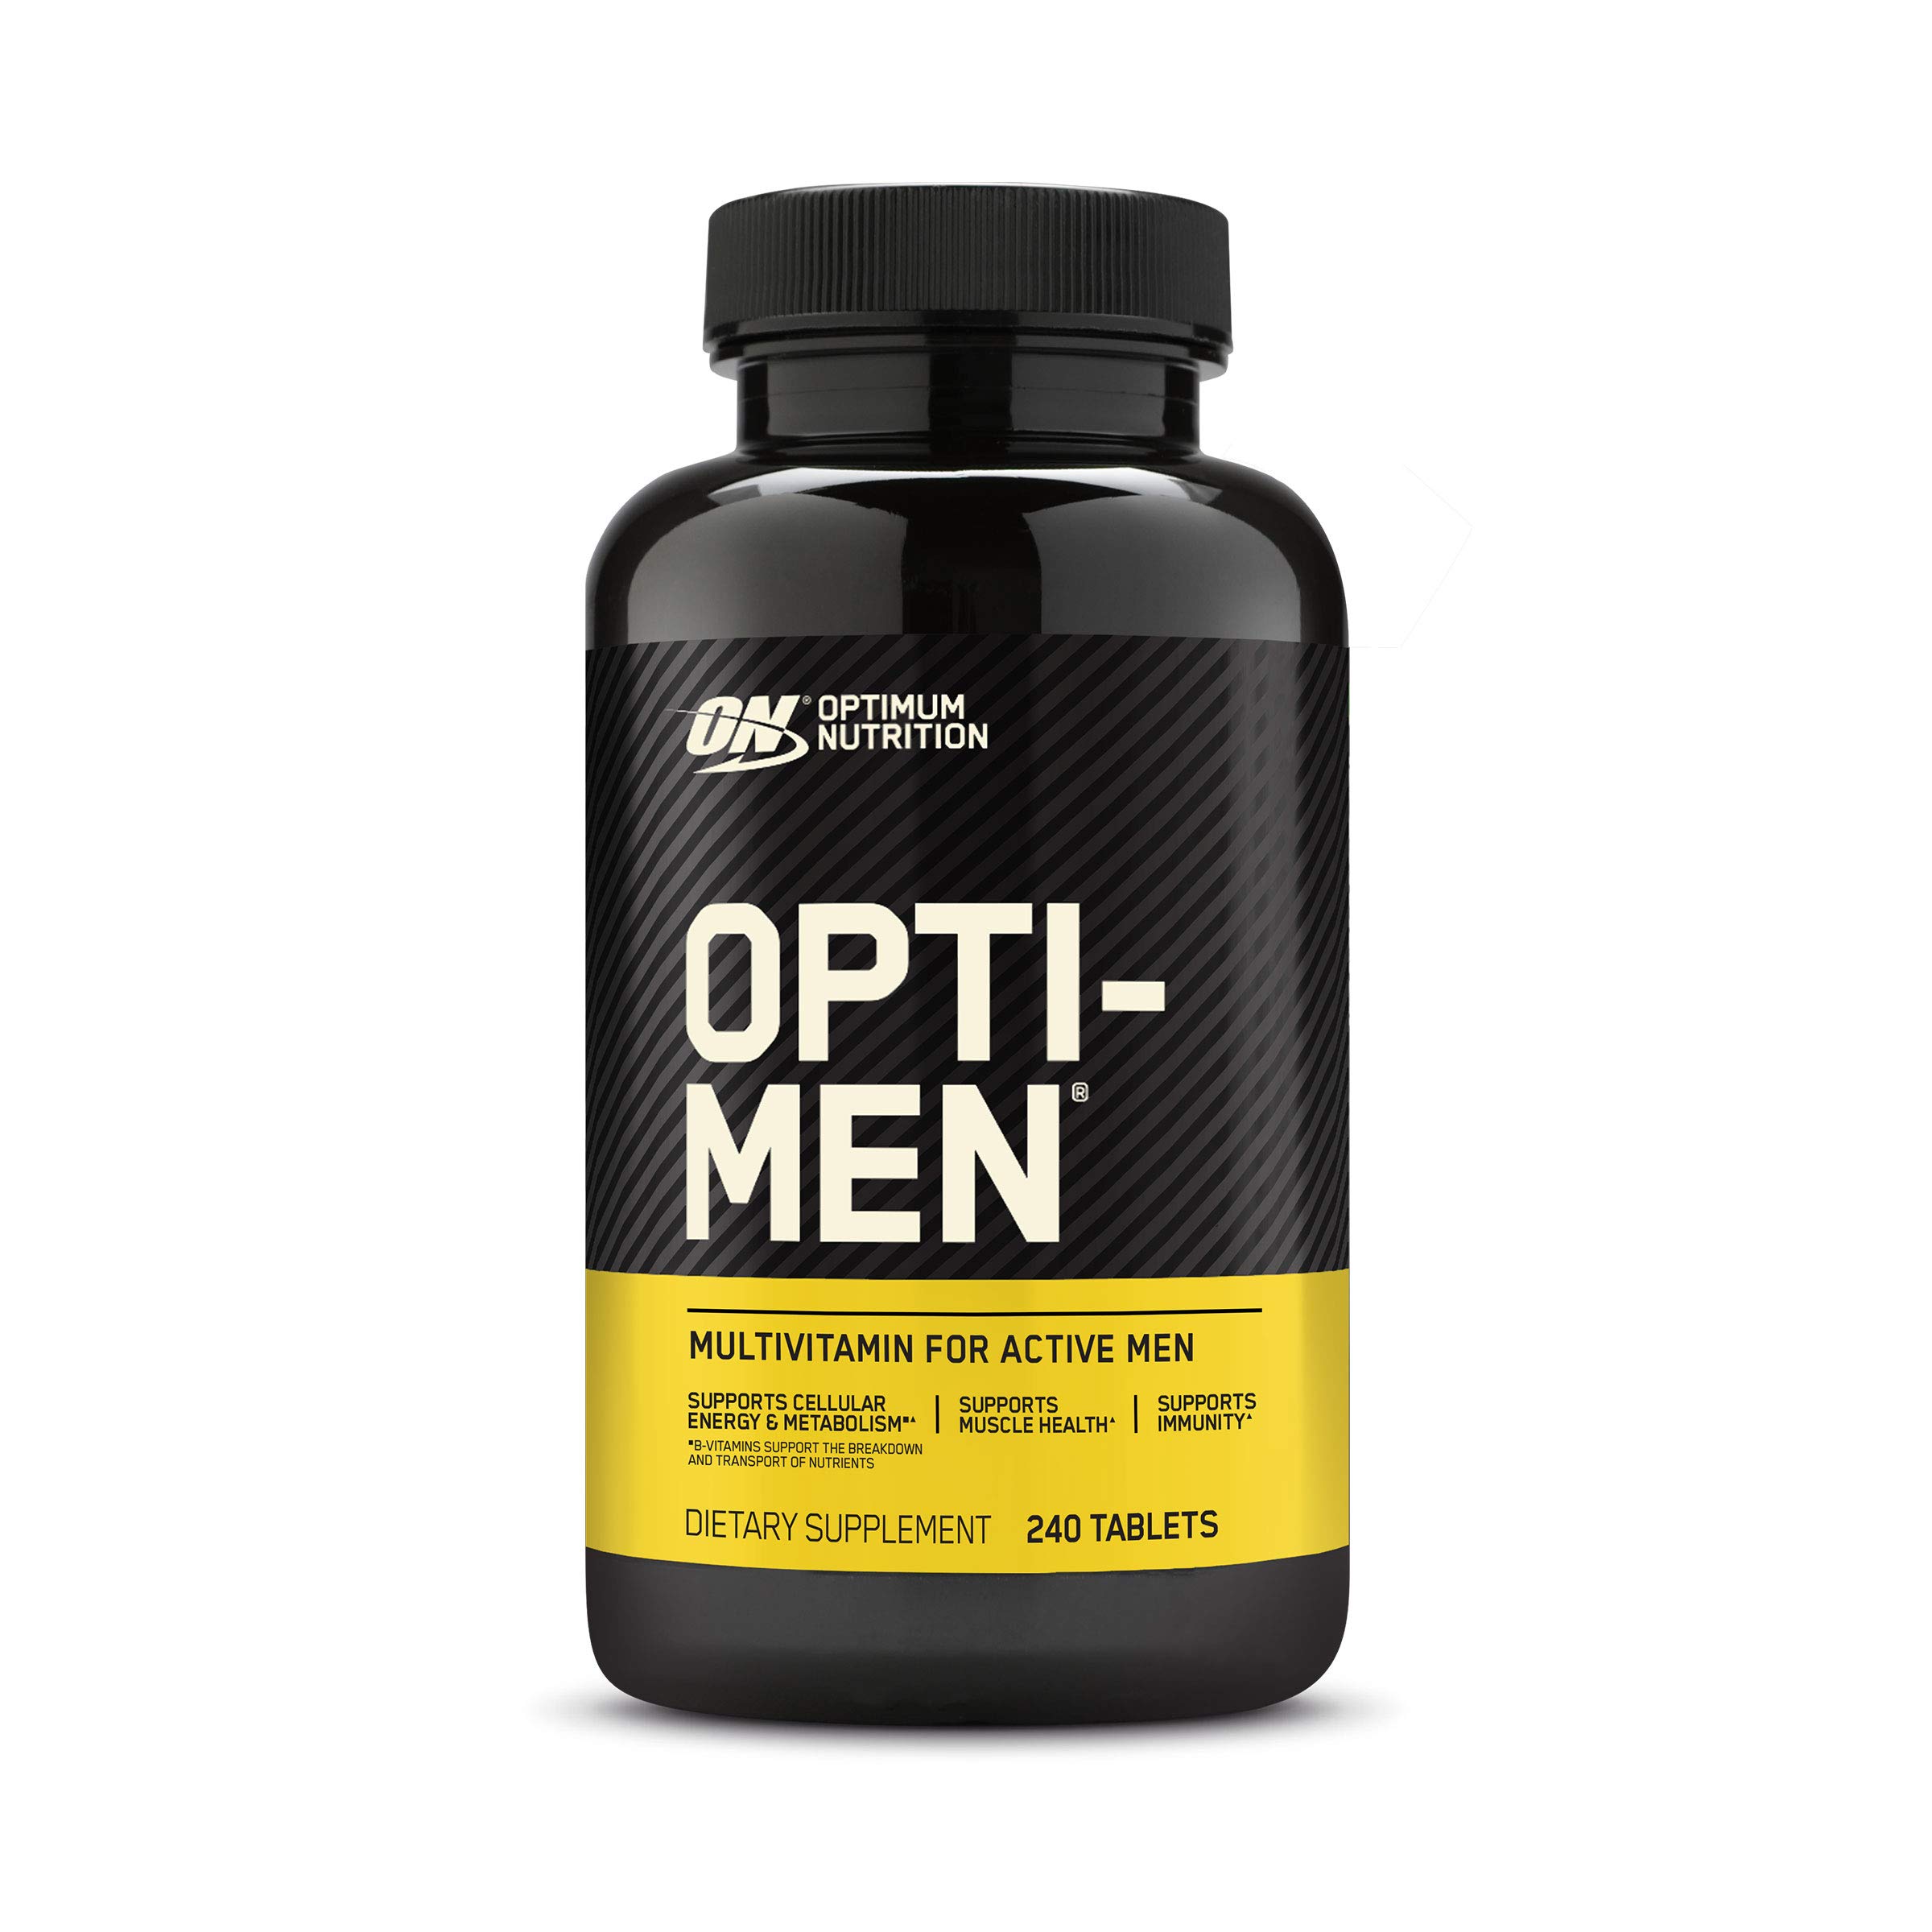 Optimum Nutrition Gold Standard 100% Whey Protein Powder, Double Rich Chocolate 10 Pound & Opti-Men, Mens Daily Multivitamin Supplement, 240 Count